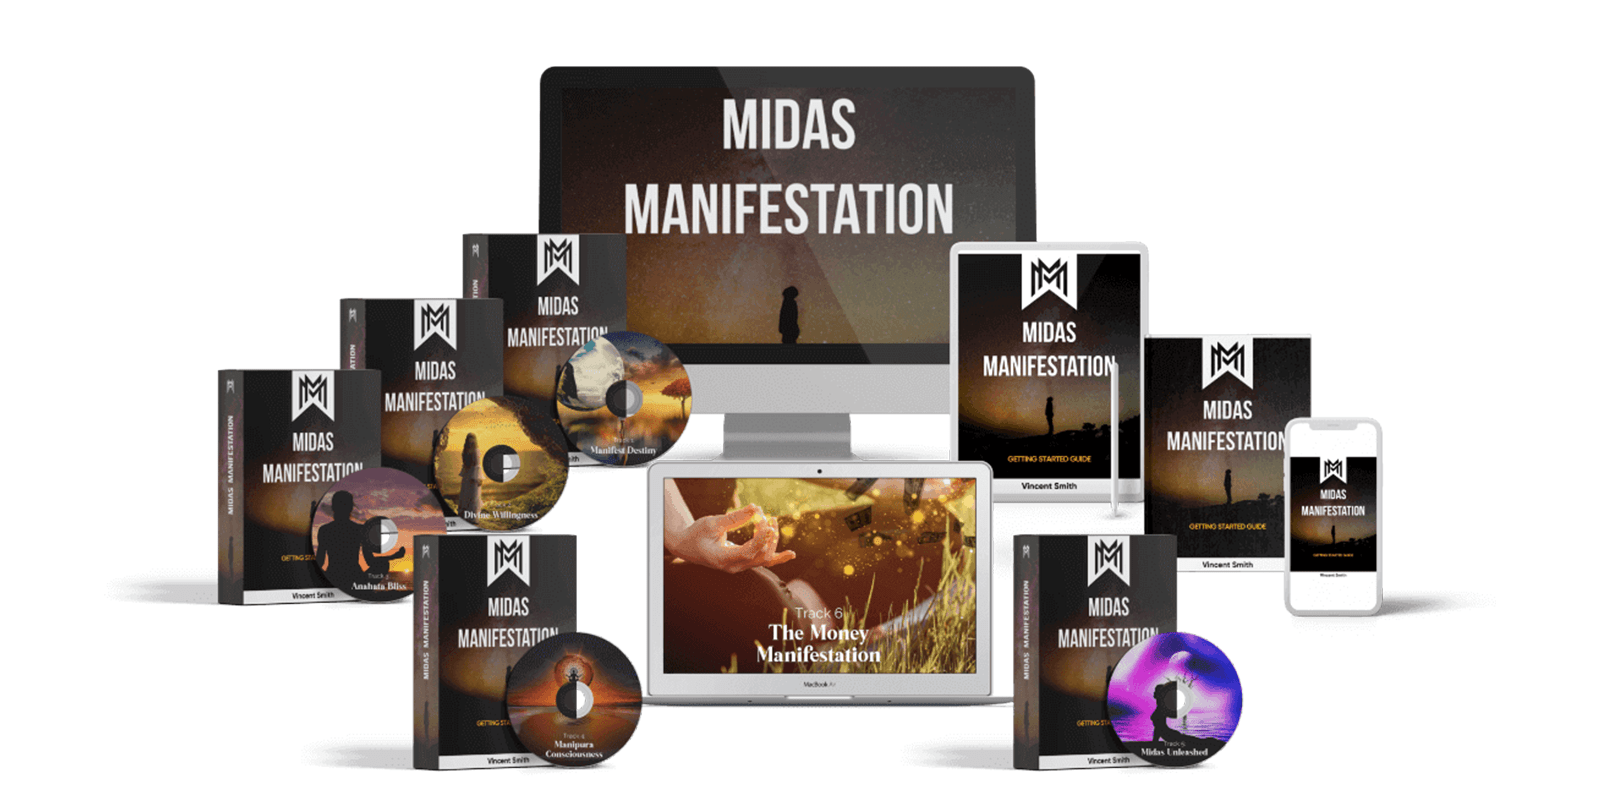 Midas-manifestation reviews